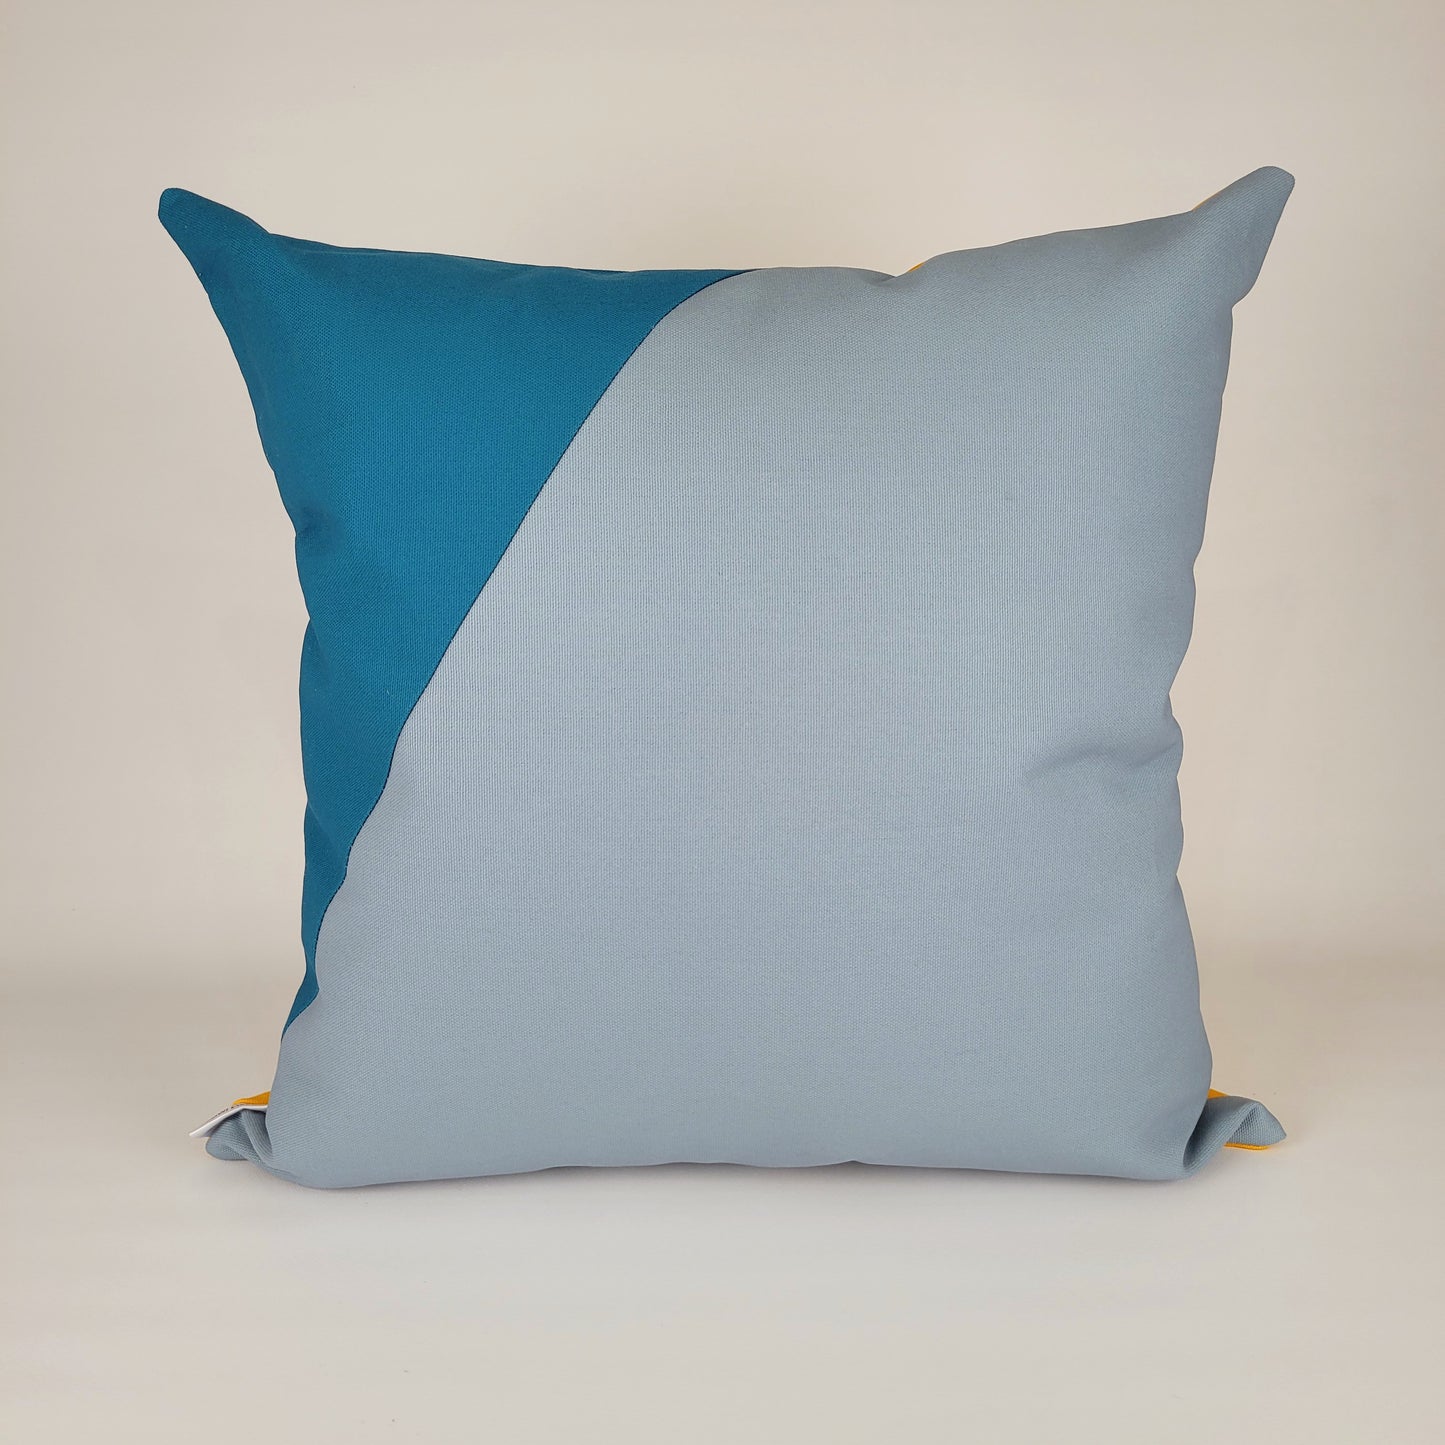 50s Mod Geometric Outdoor Throw Pillow 20"